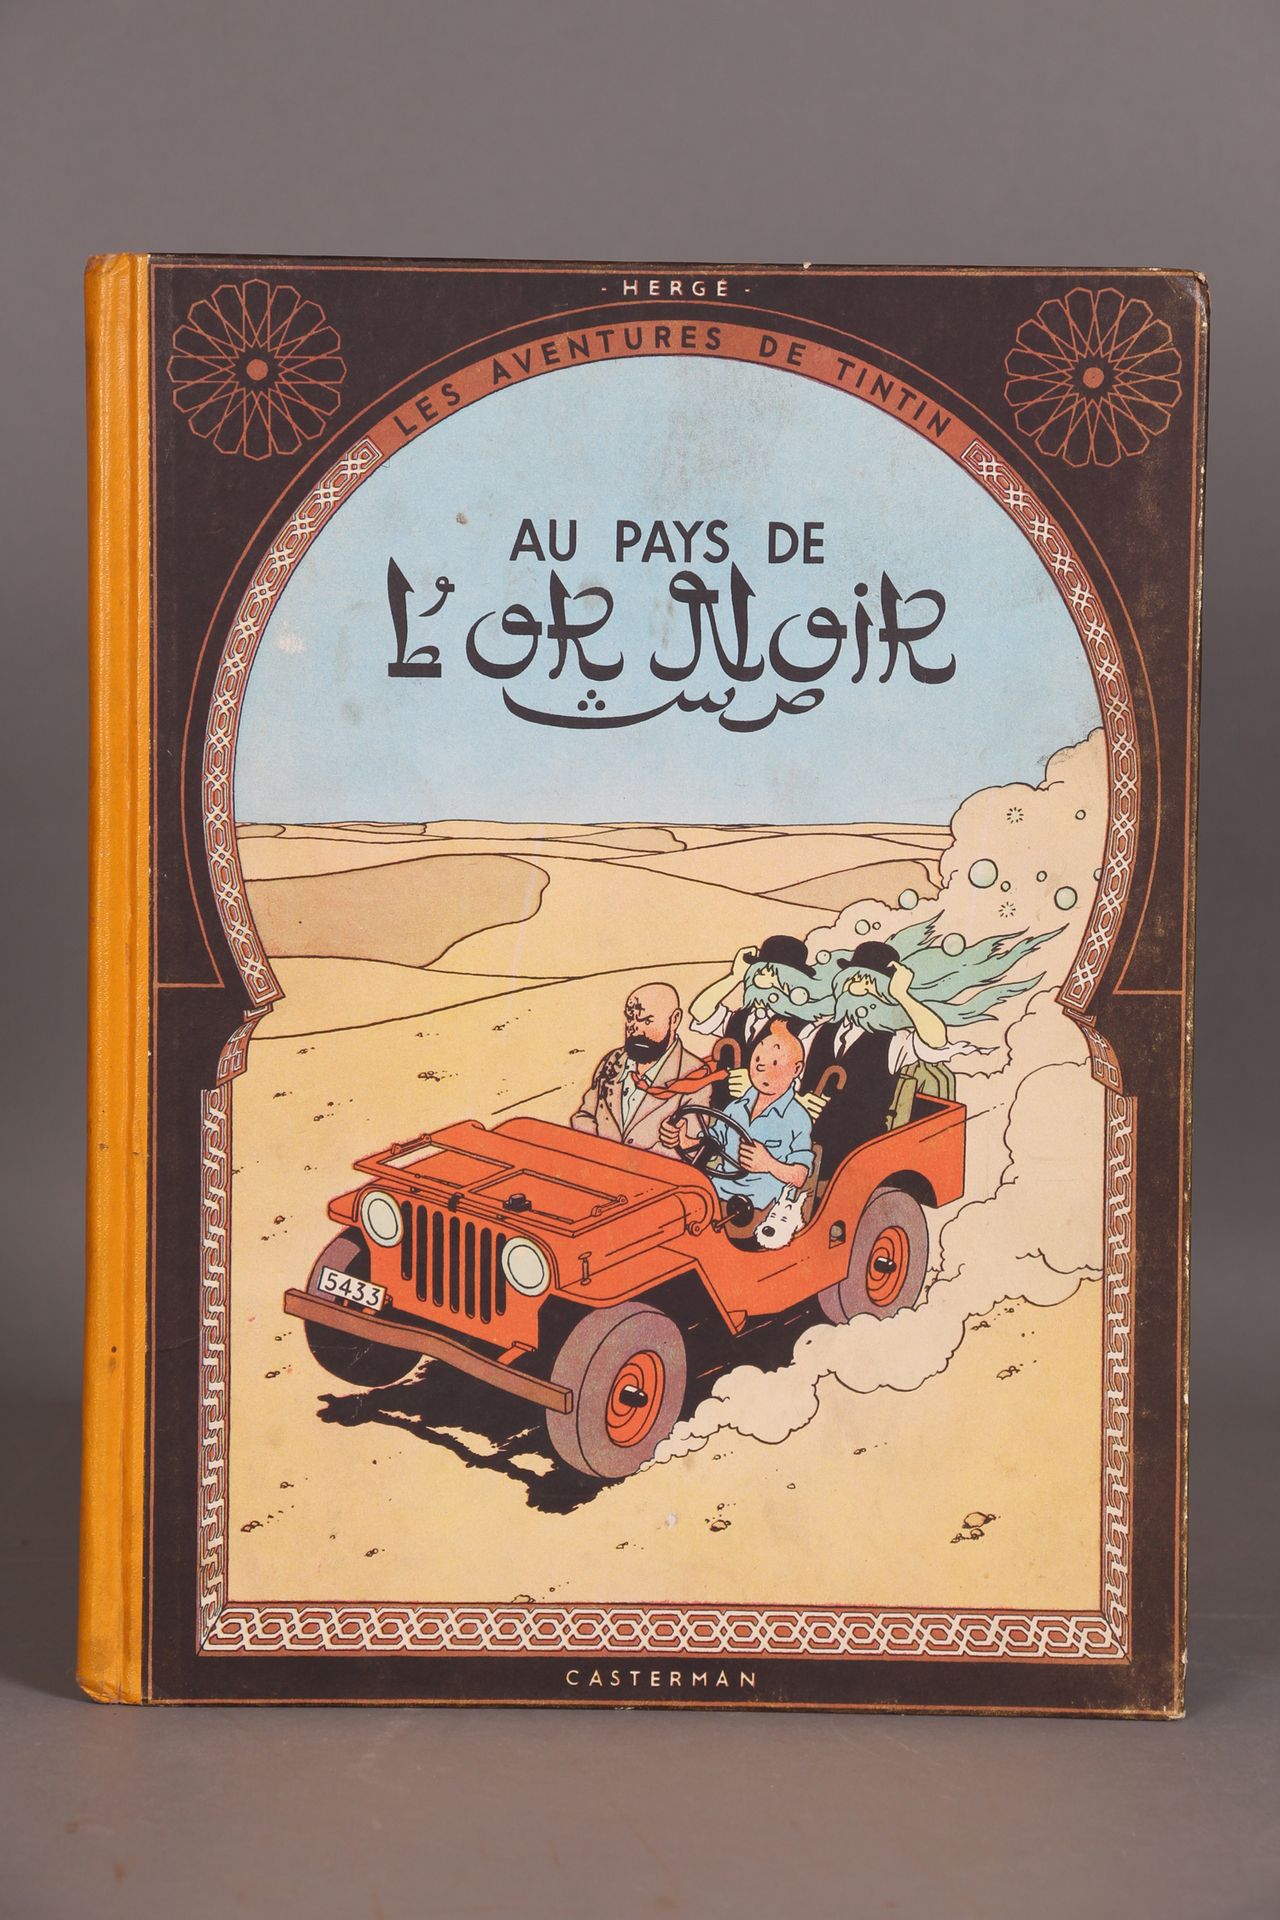 [TINTIN]. HERGÉ. "Tintin au pays de l'or noir" Casterman, 1950. First edition. Y&hellip;